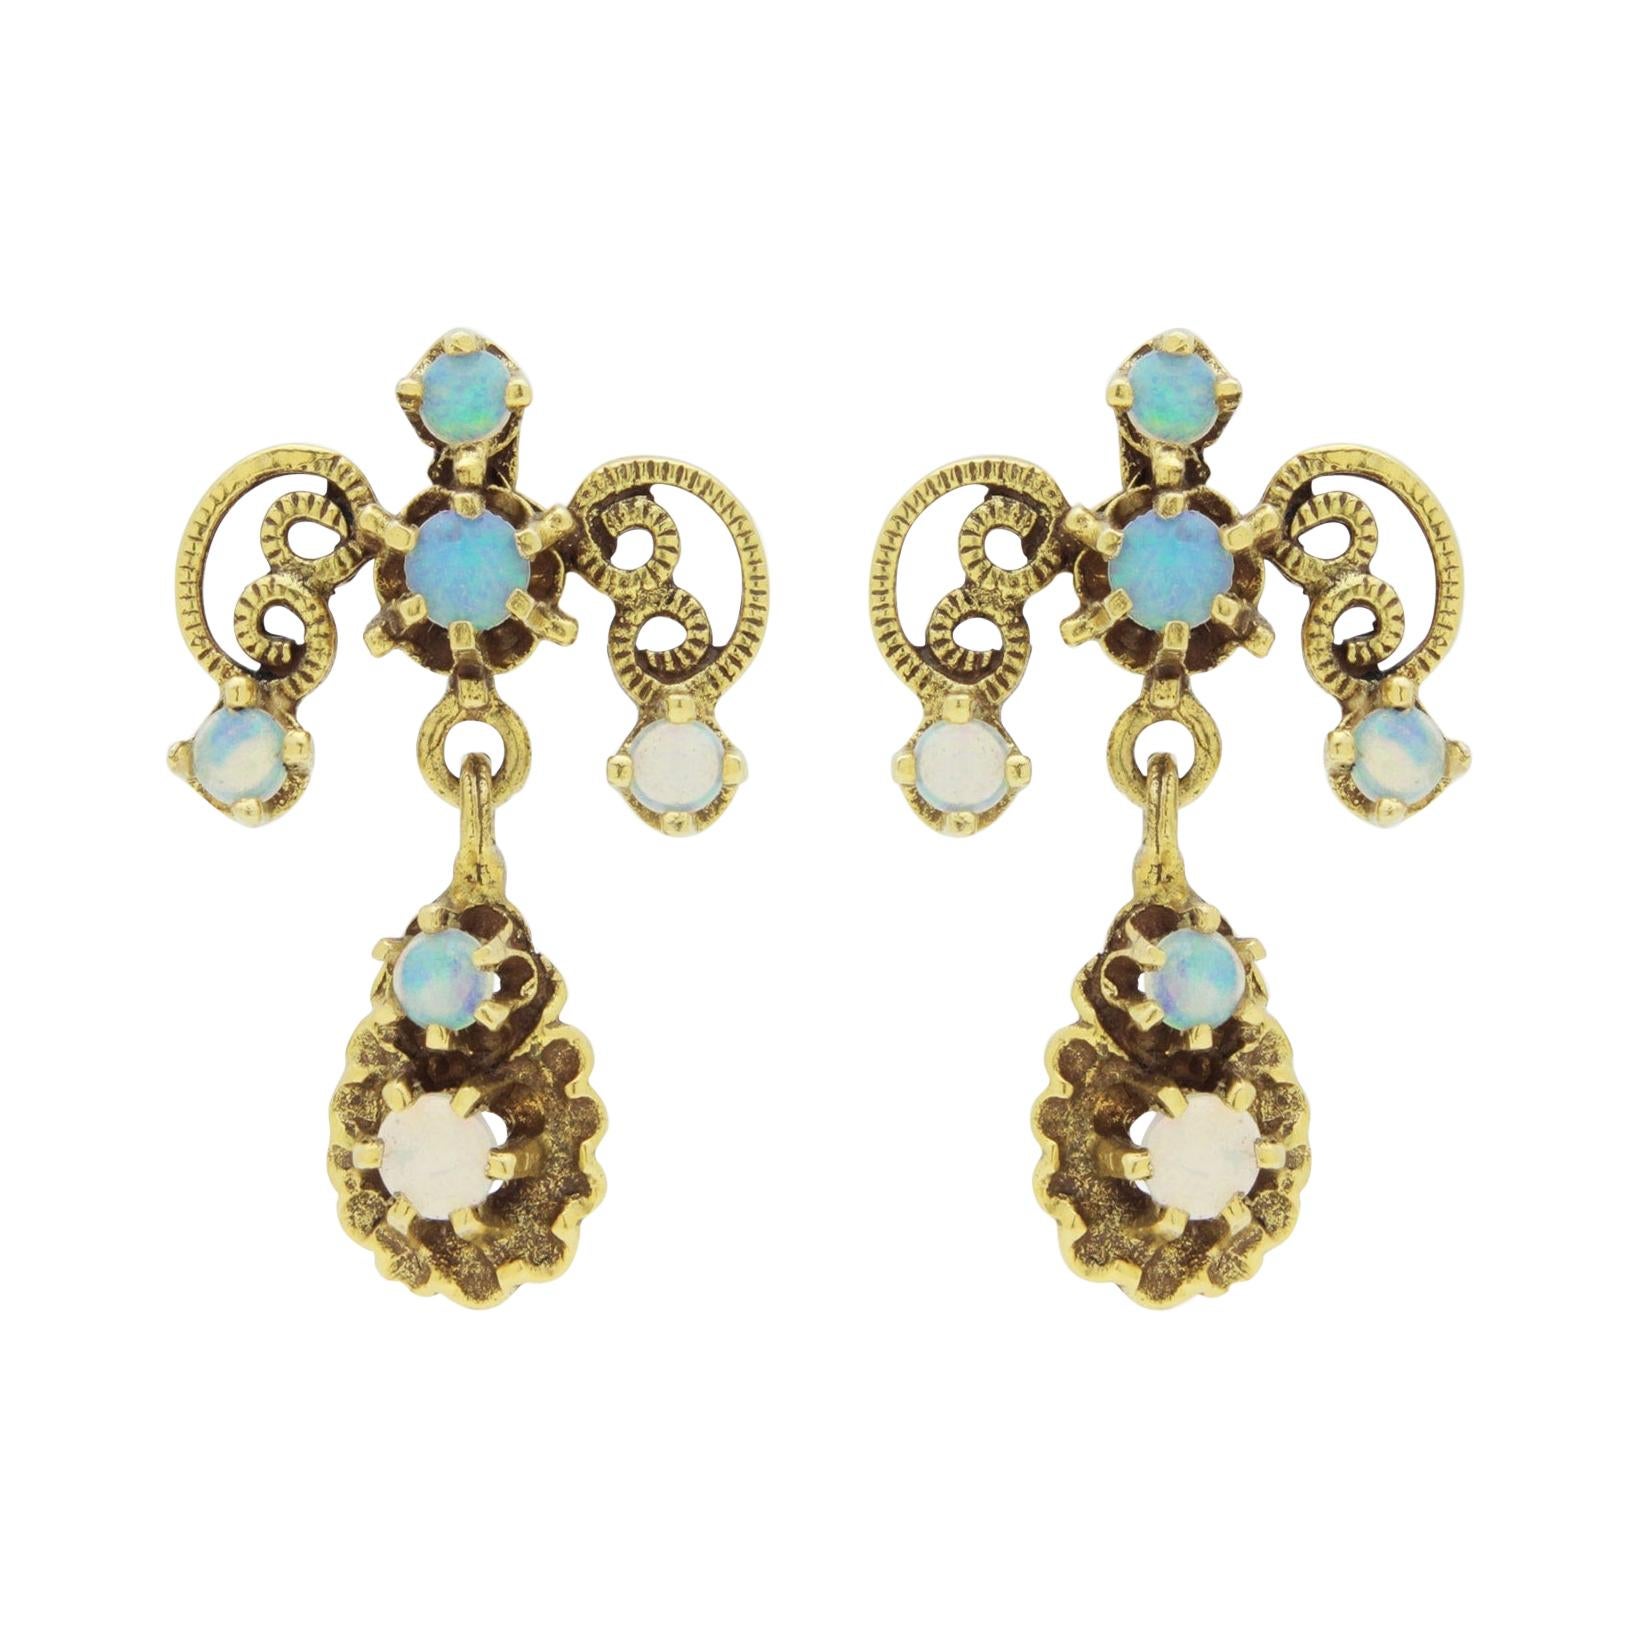 14 Karat Yellow Gold and Opal, Art Nouveau Style Earrings